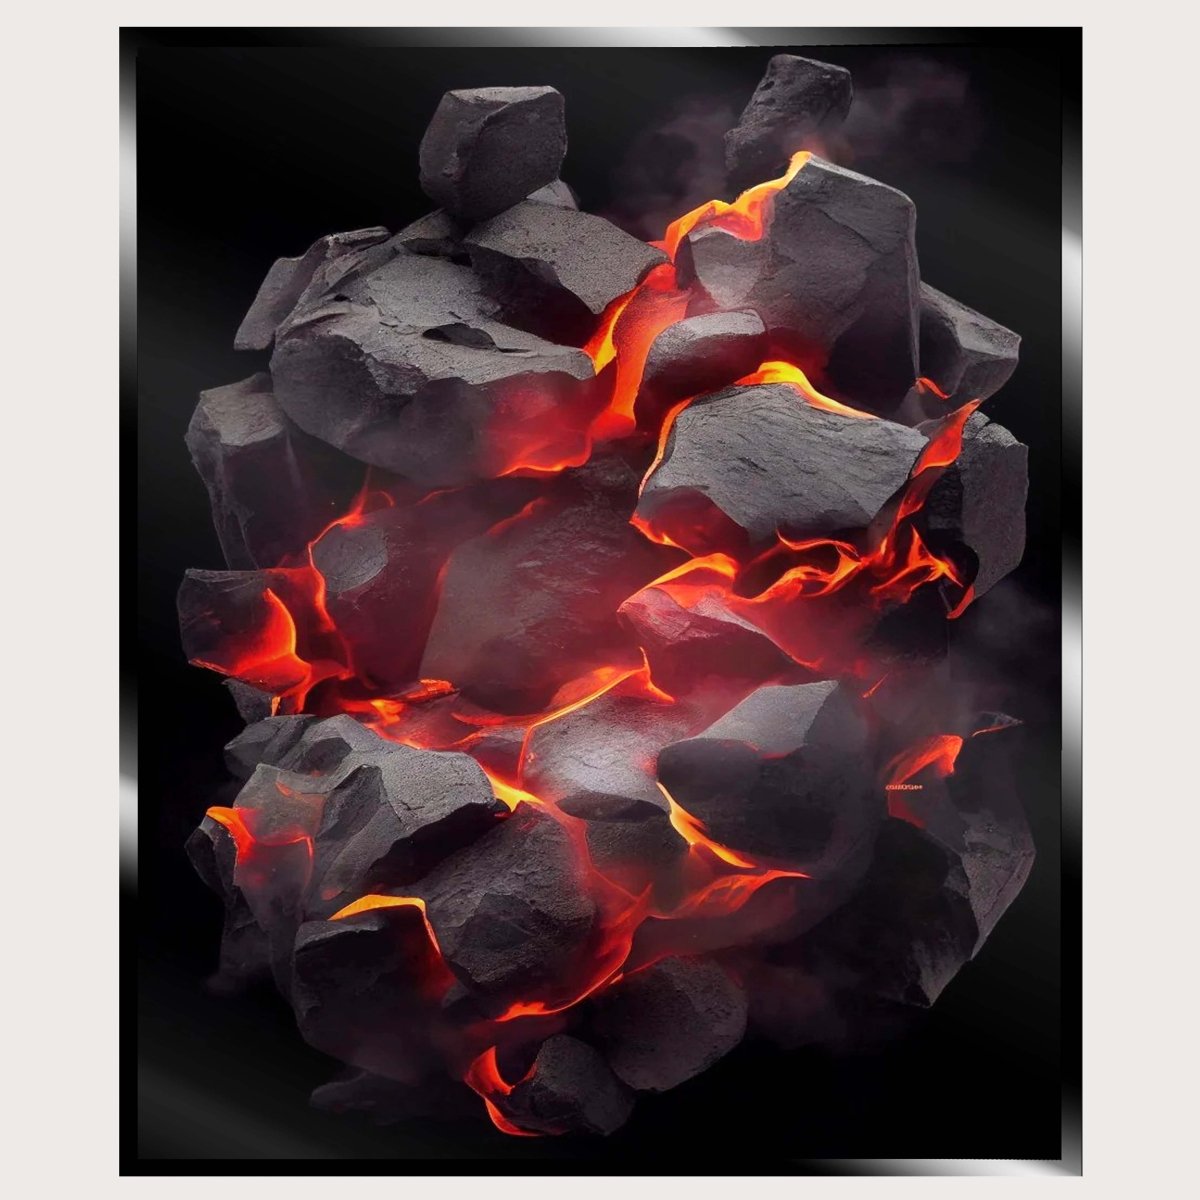 Illuminated Wall Art - Hot Burning Coals - madaboutneon